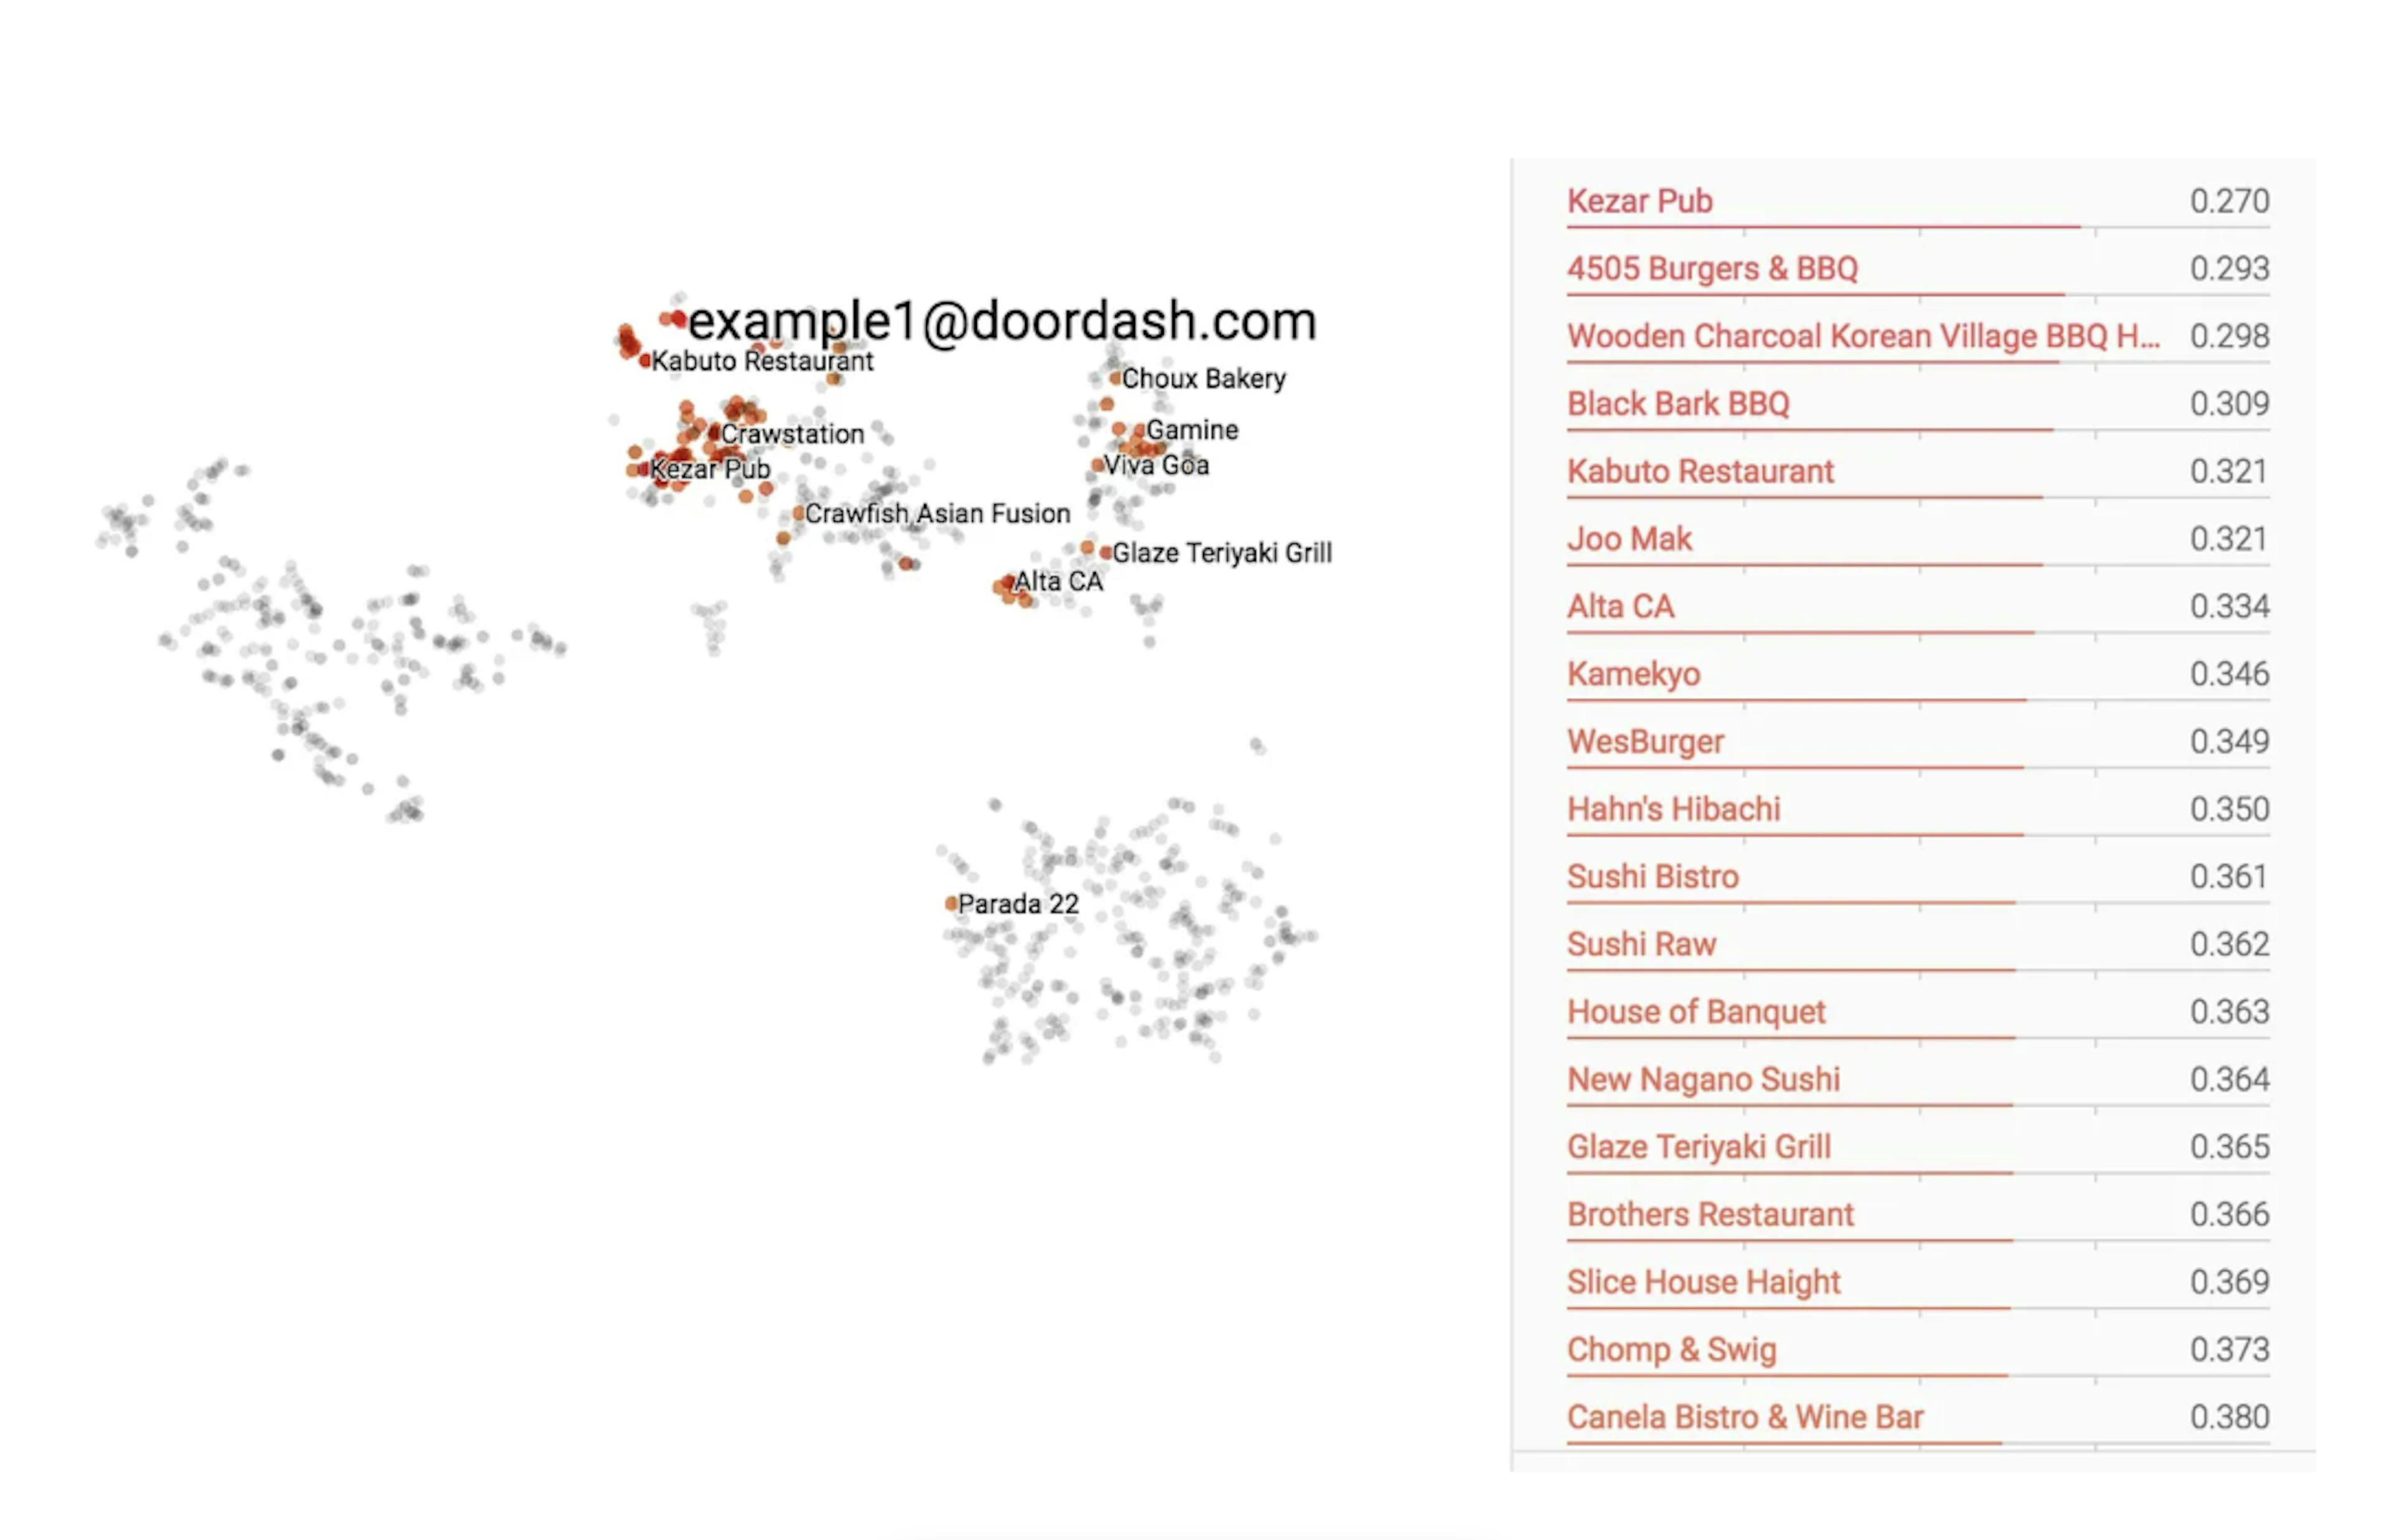 Doordash 的向量搜索示例取自博客《带有向量嵌入的个性化商店信息流》。